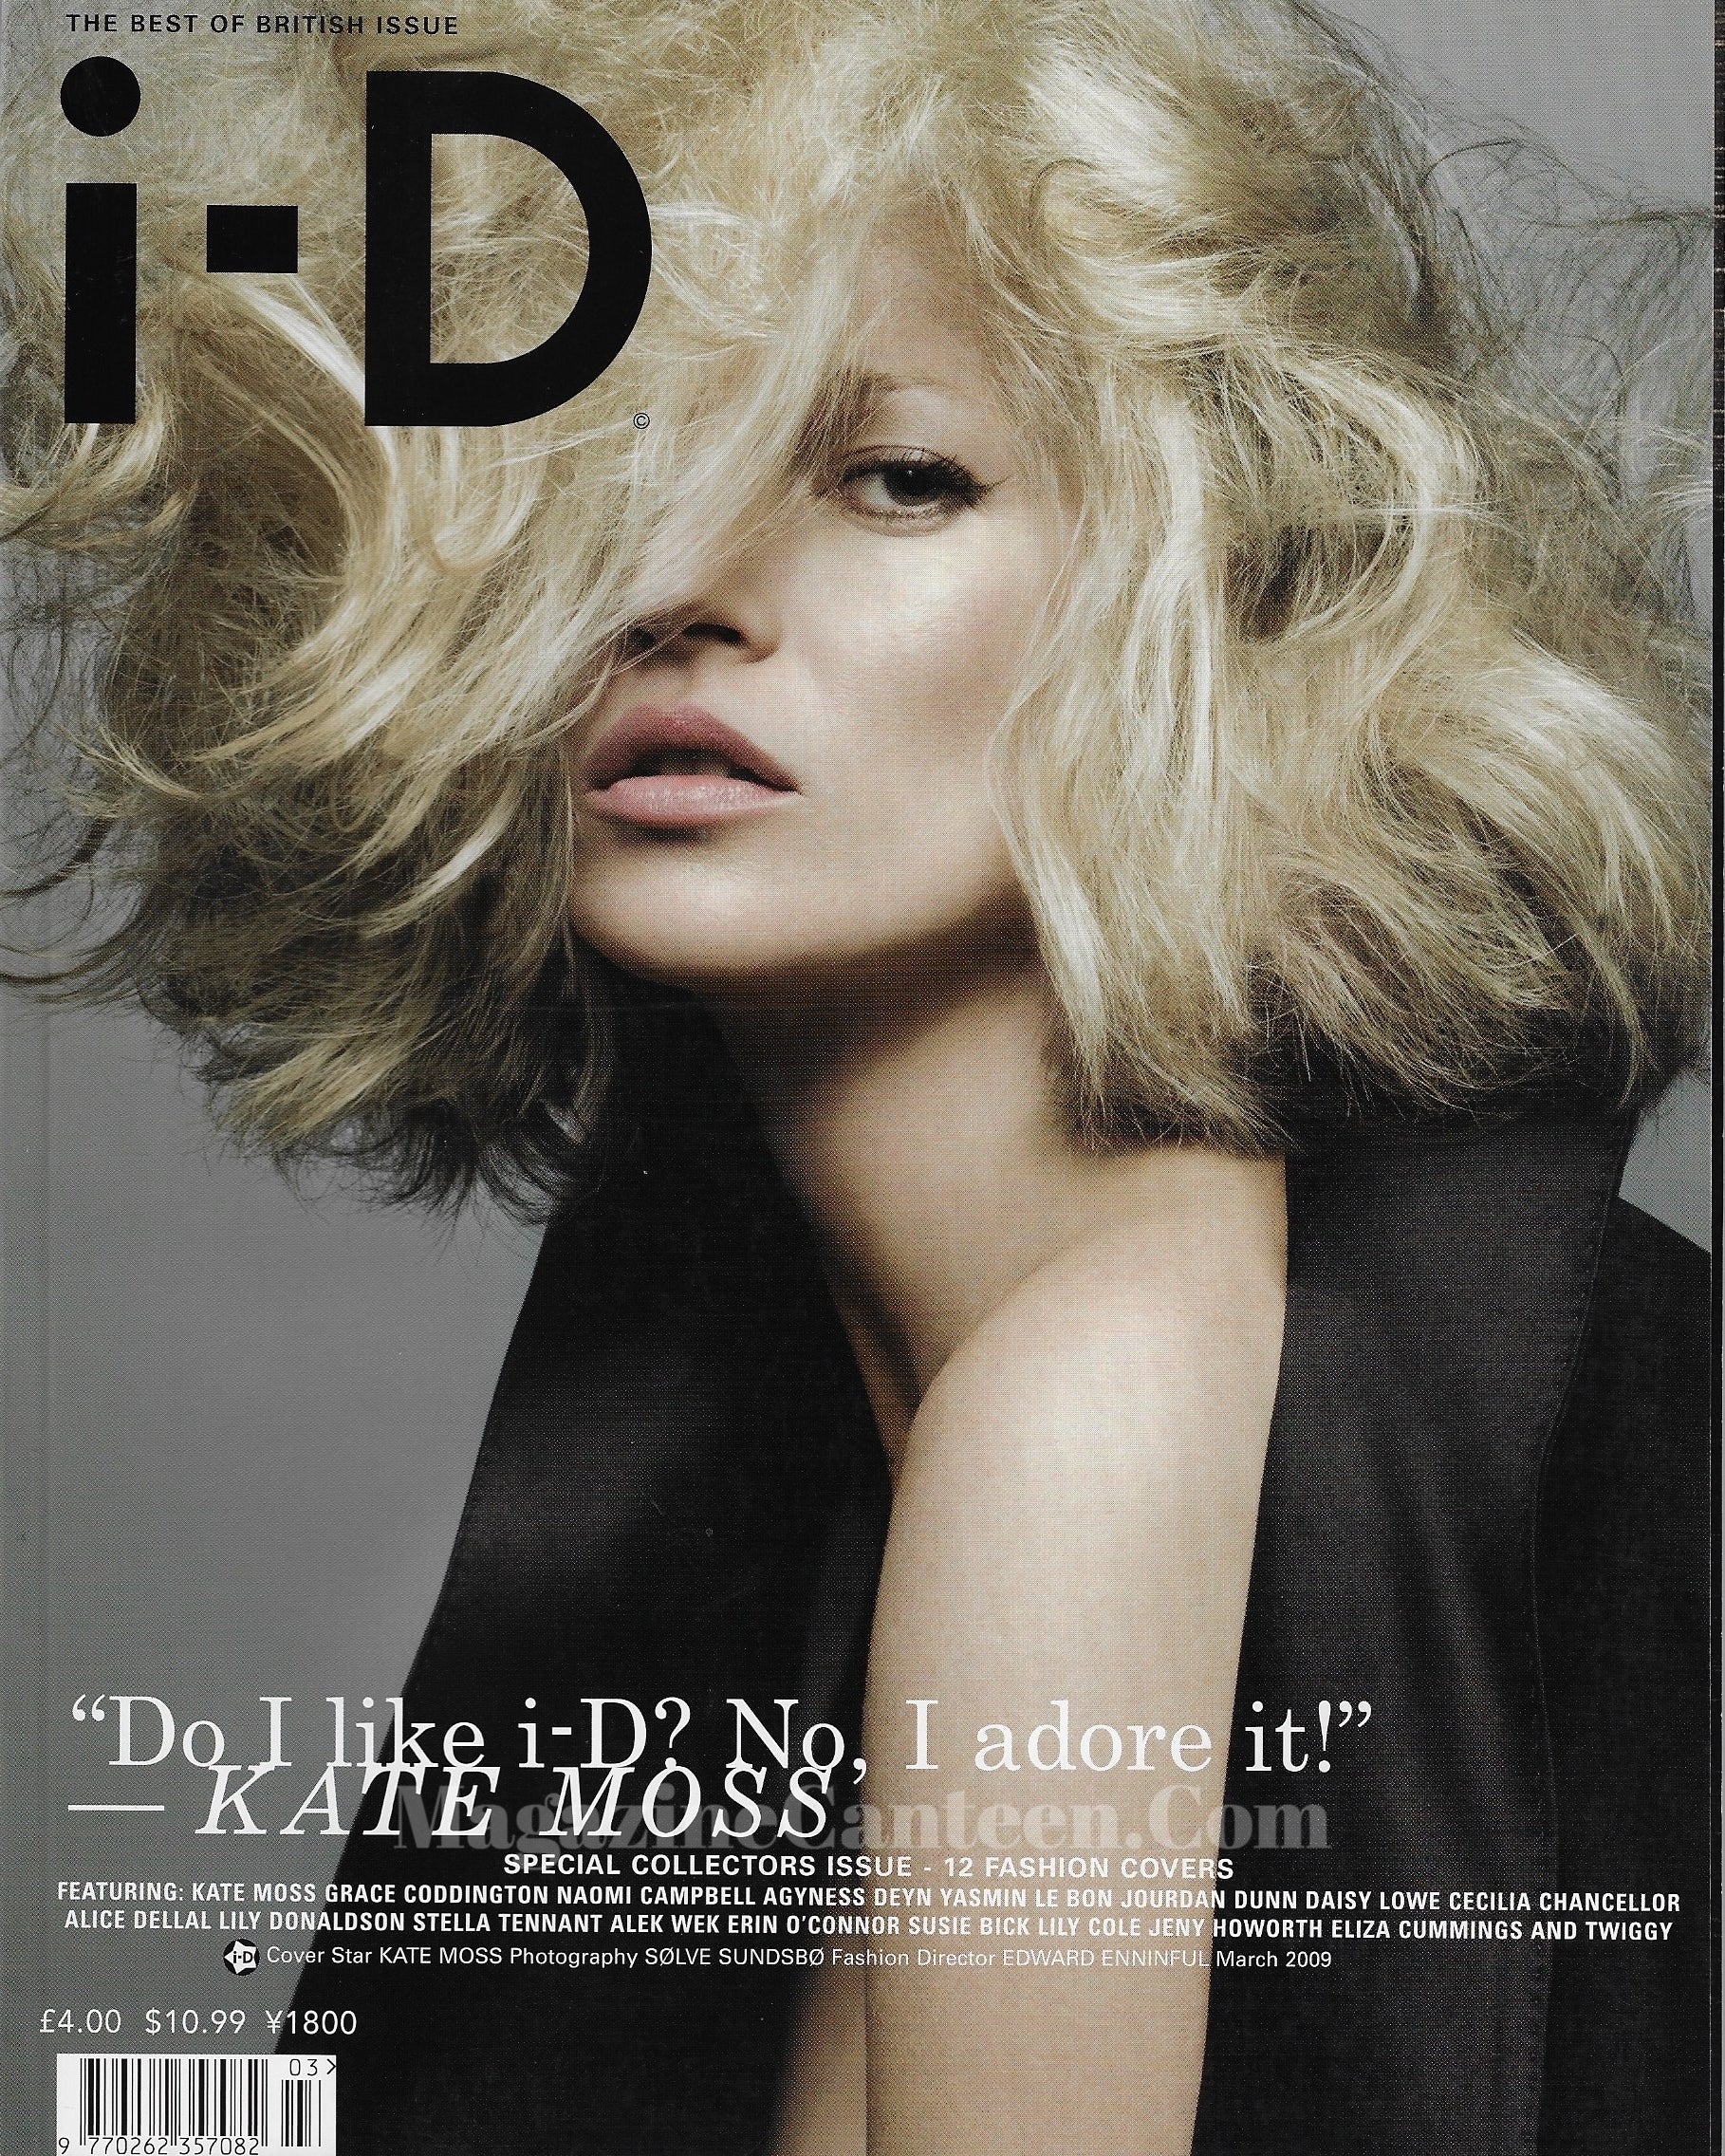 I-D Magazine 297 - Kate Moss 2009